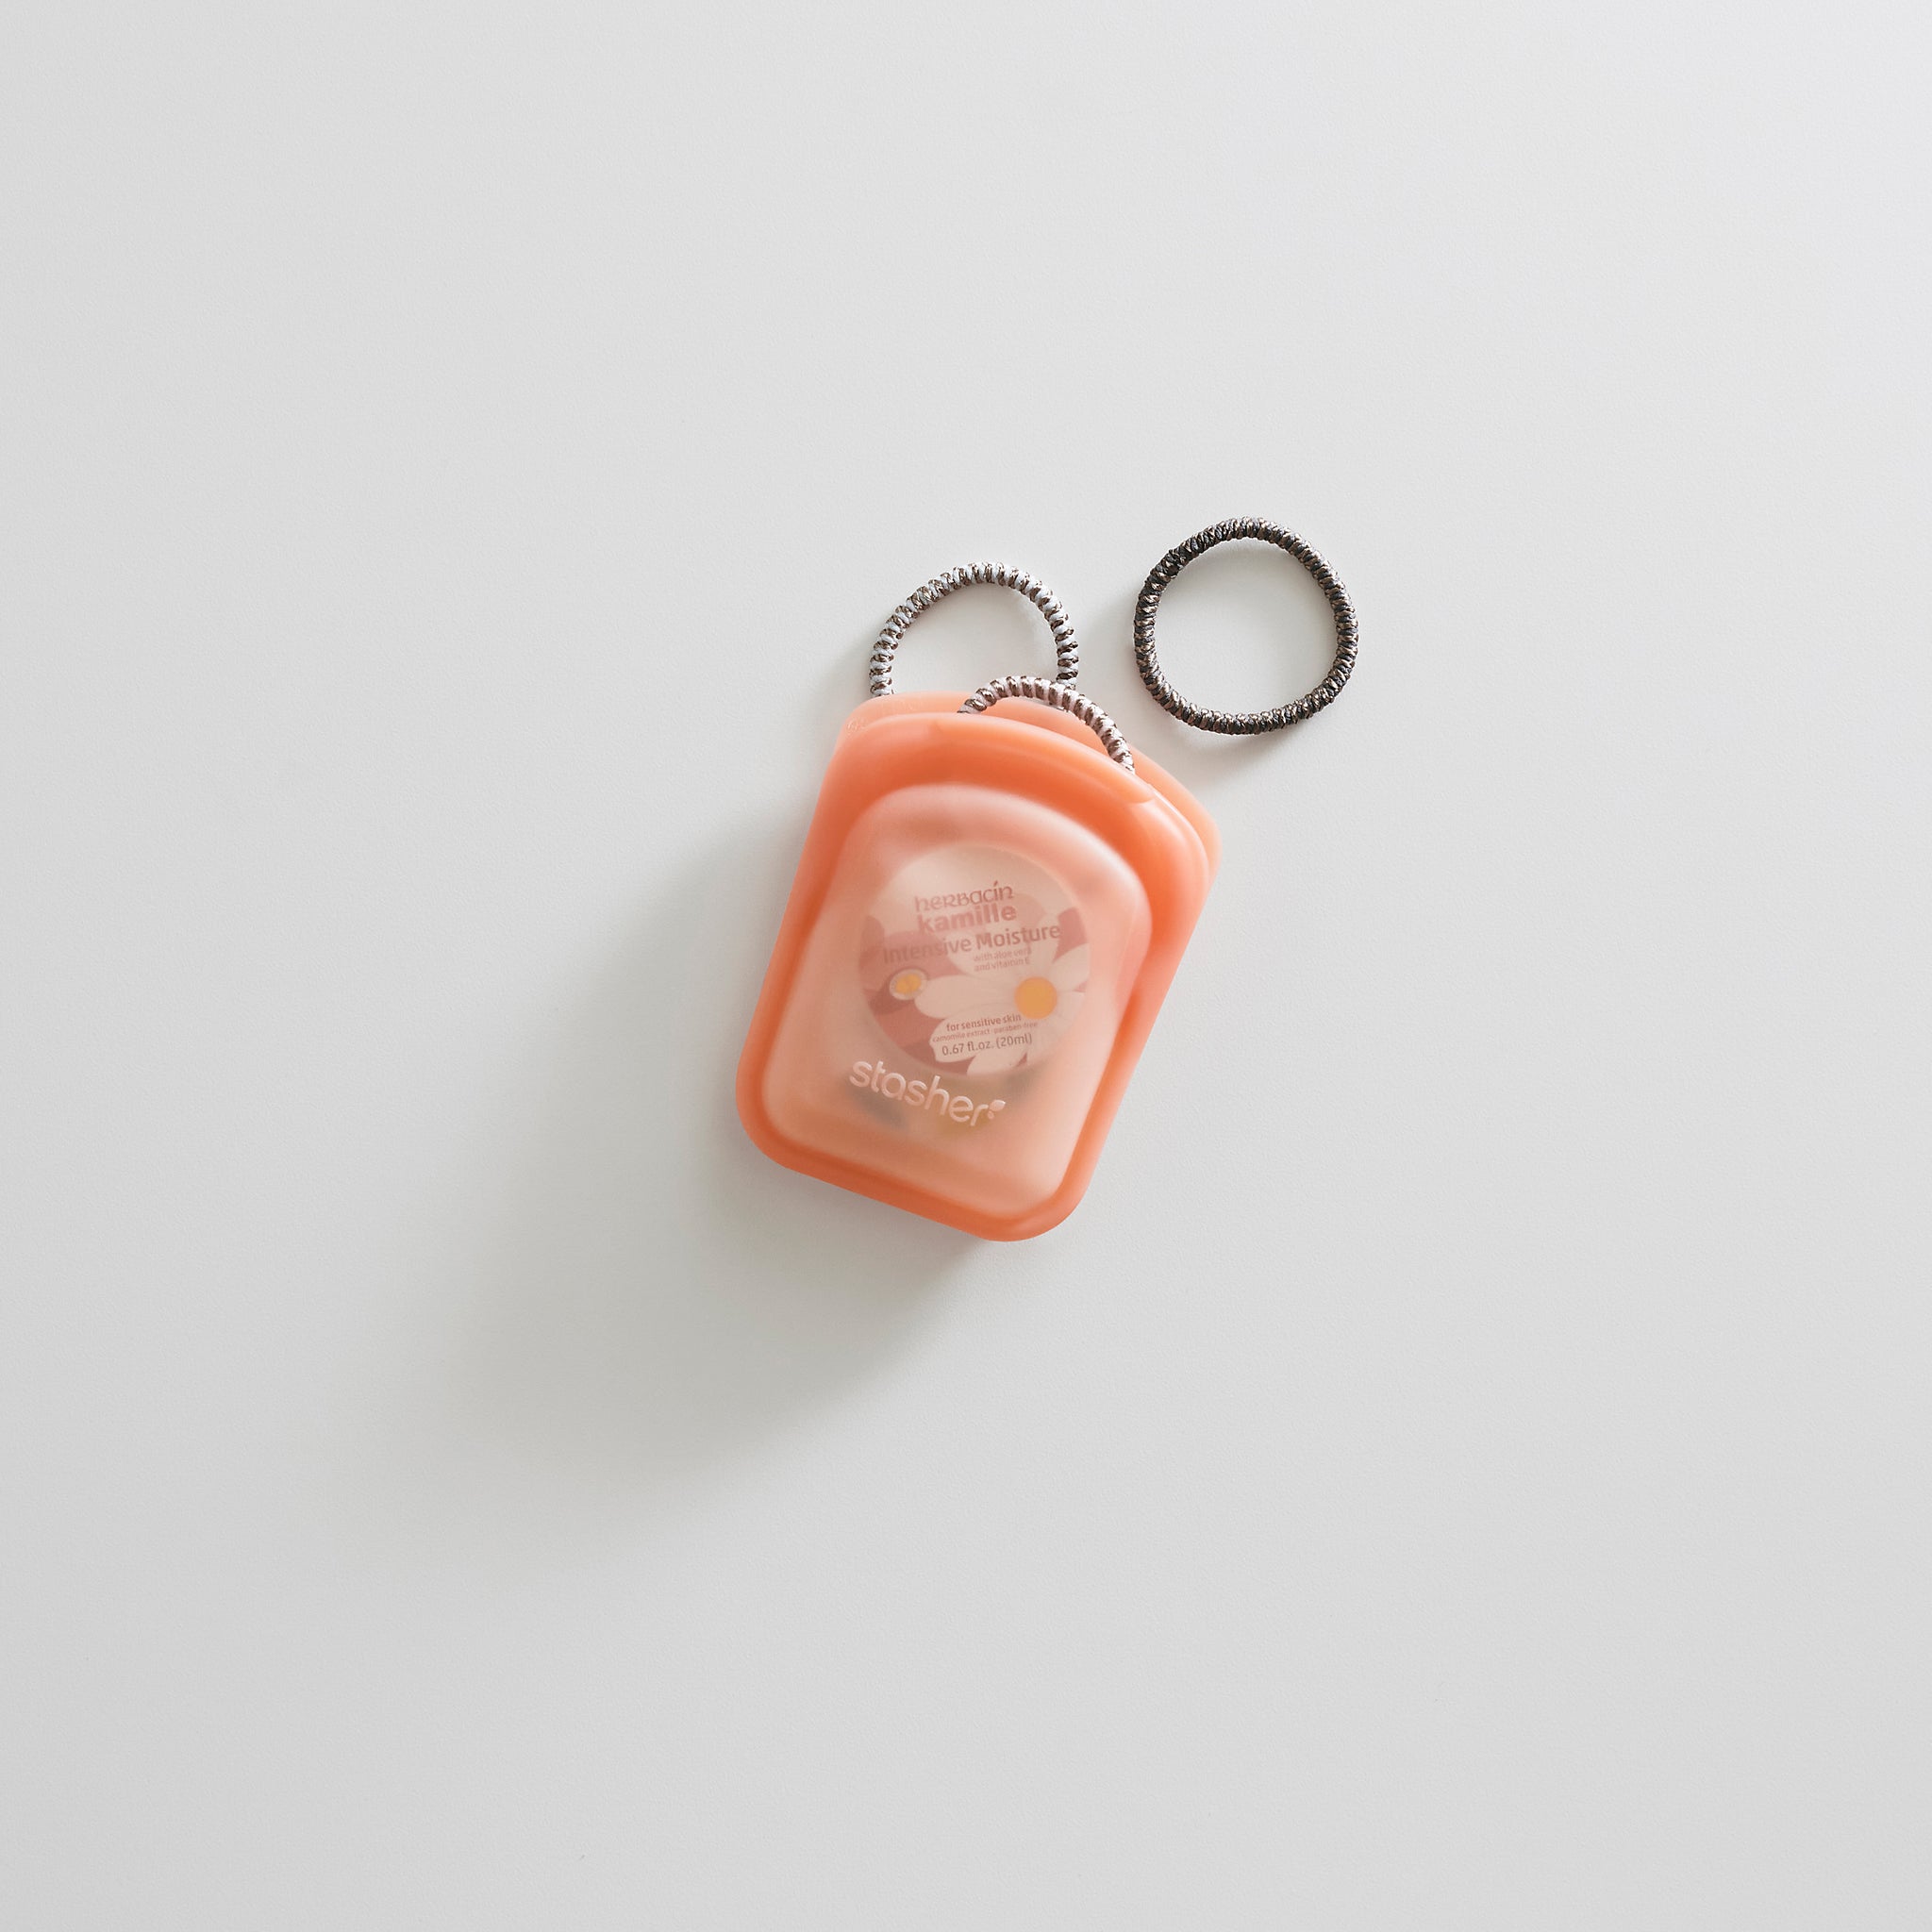 Wholesale Mini Dry Erase Markers - Keychain Clip